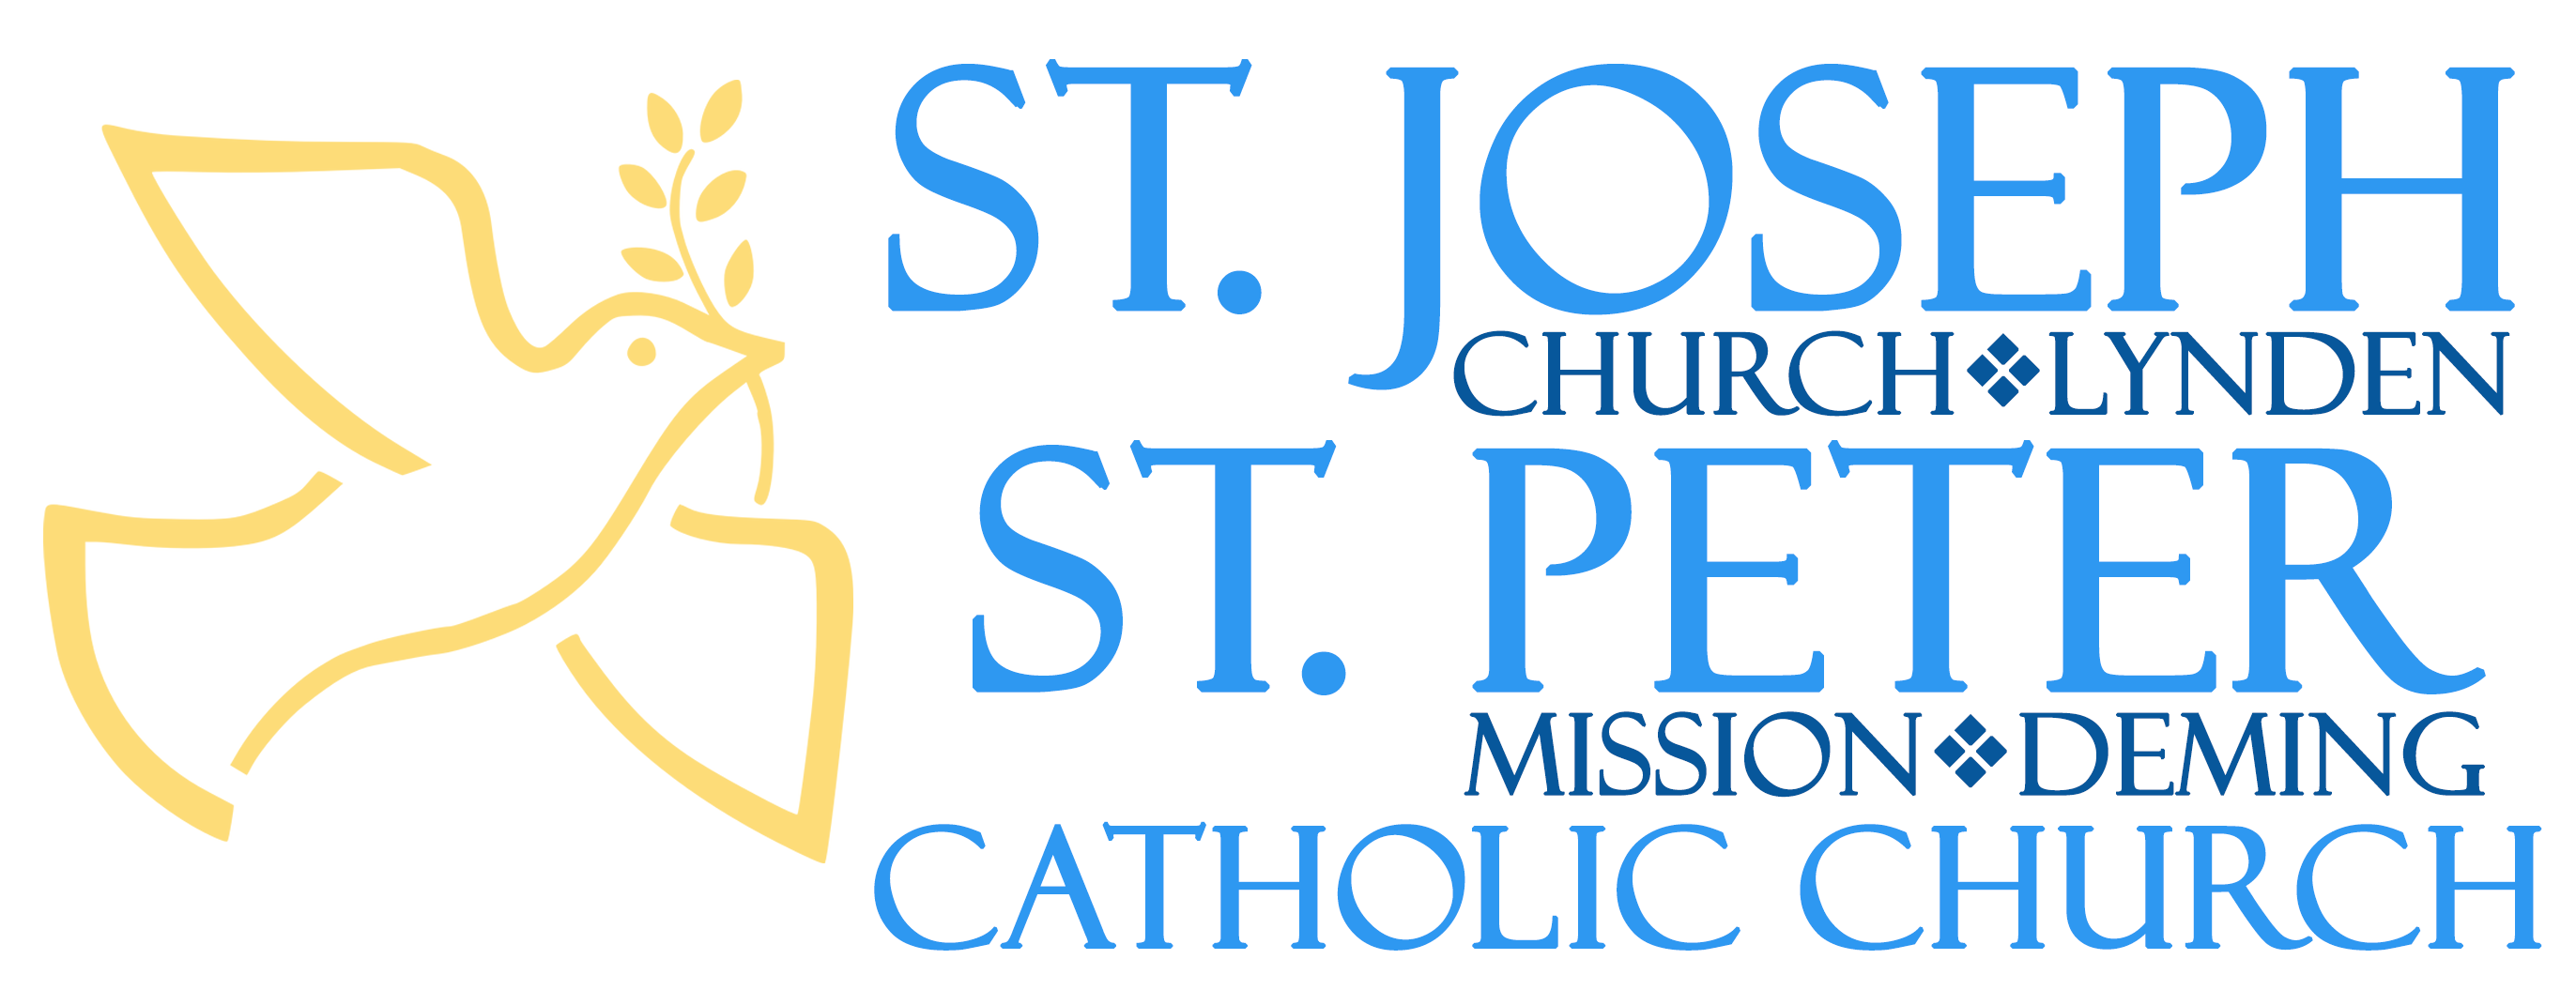 St. Joseph Church Lynden logo